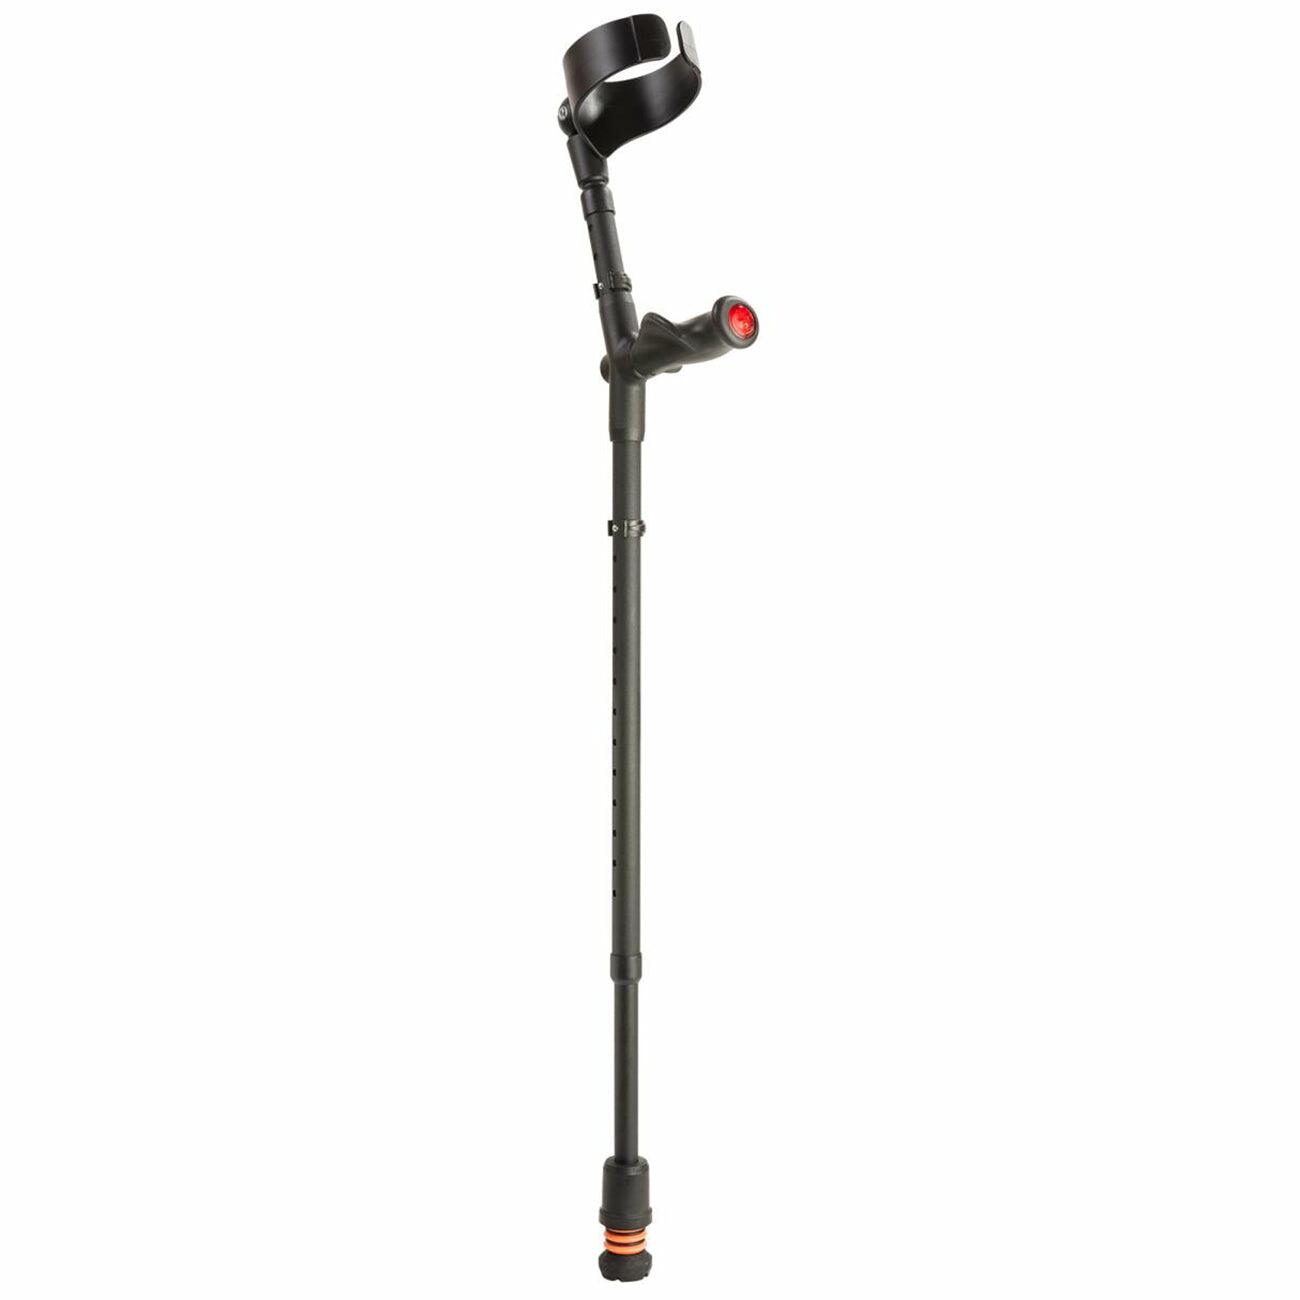 A single Textured black Flexyfoot Comfort Grip Double Adjustable Crutch